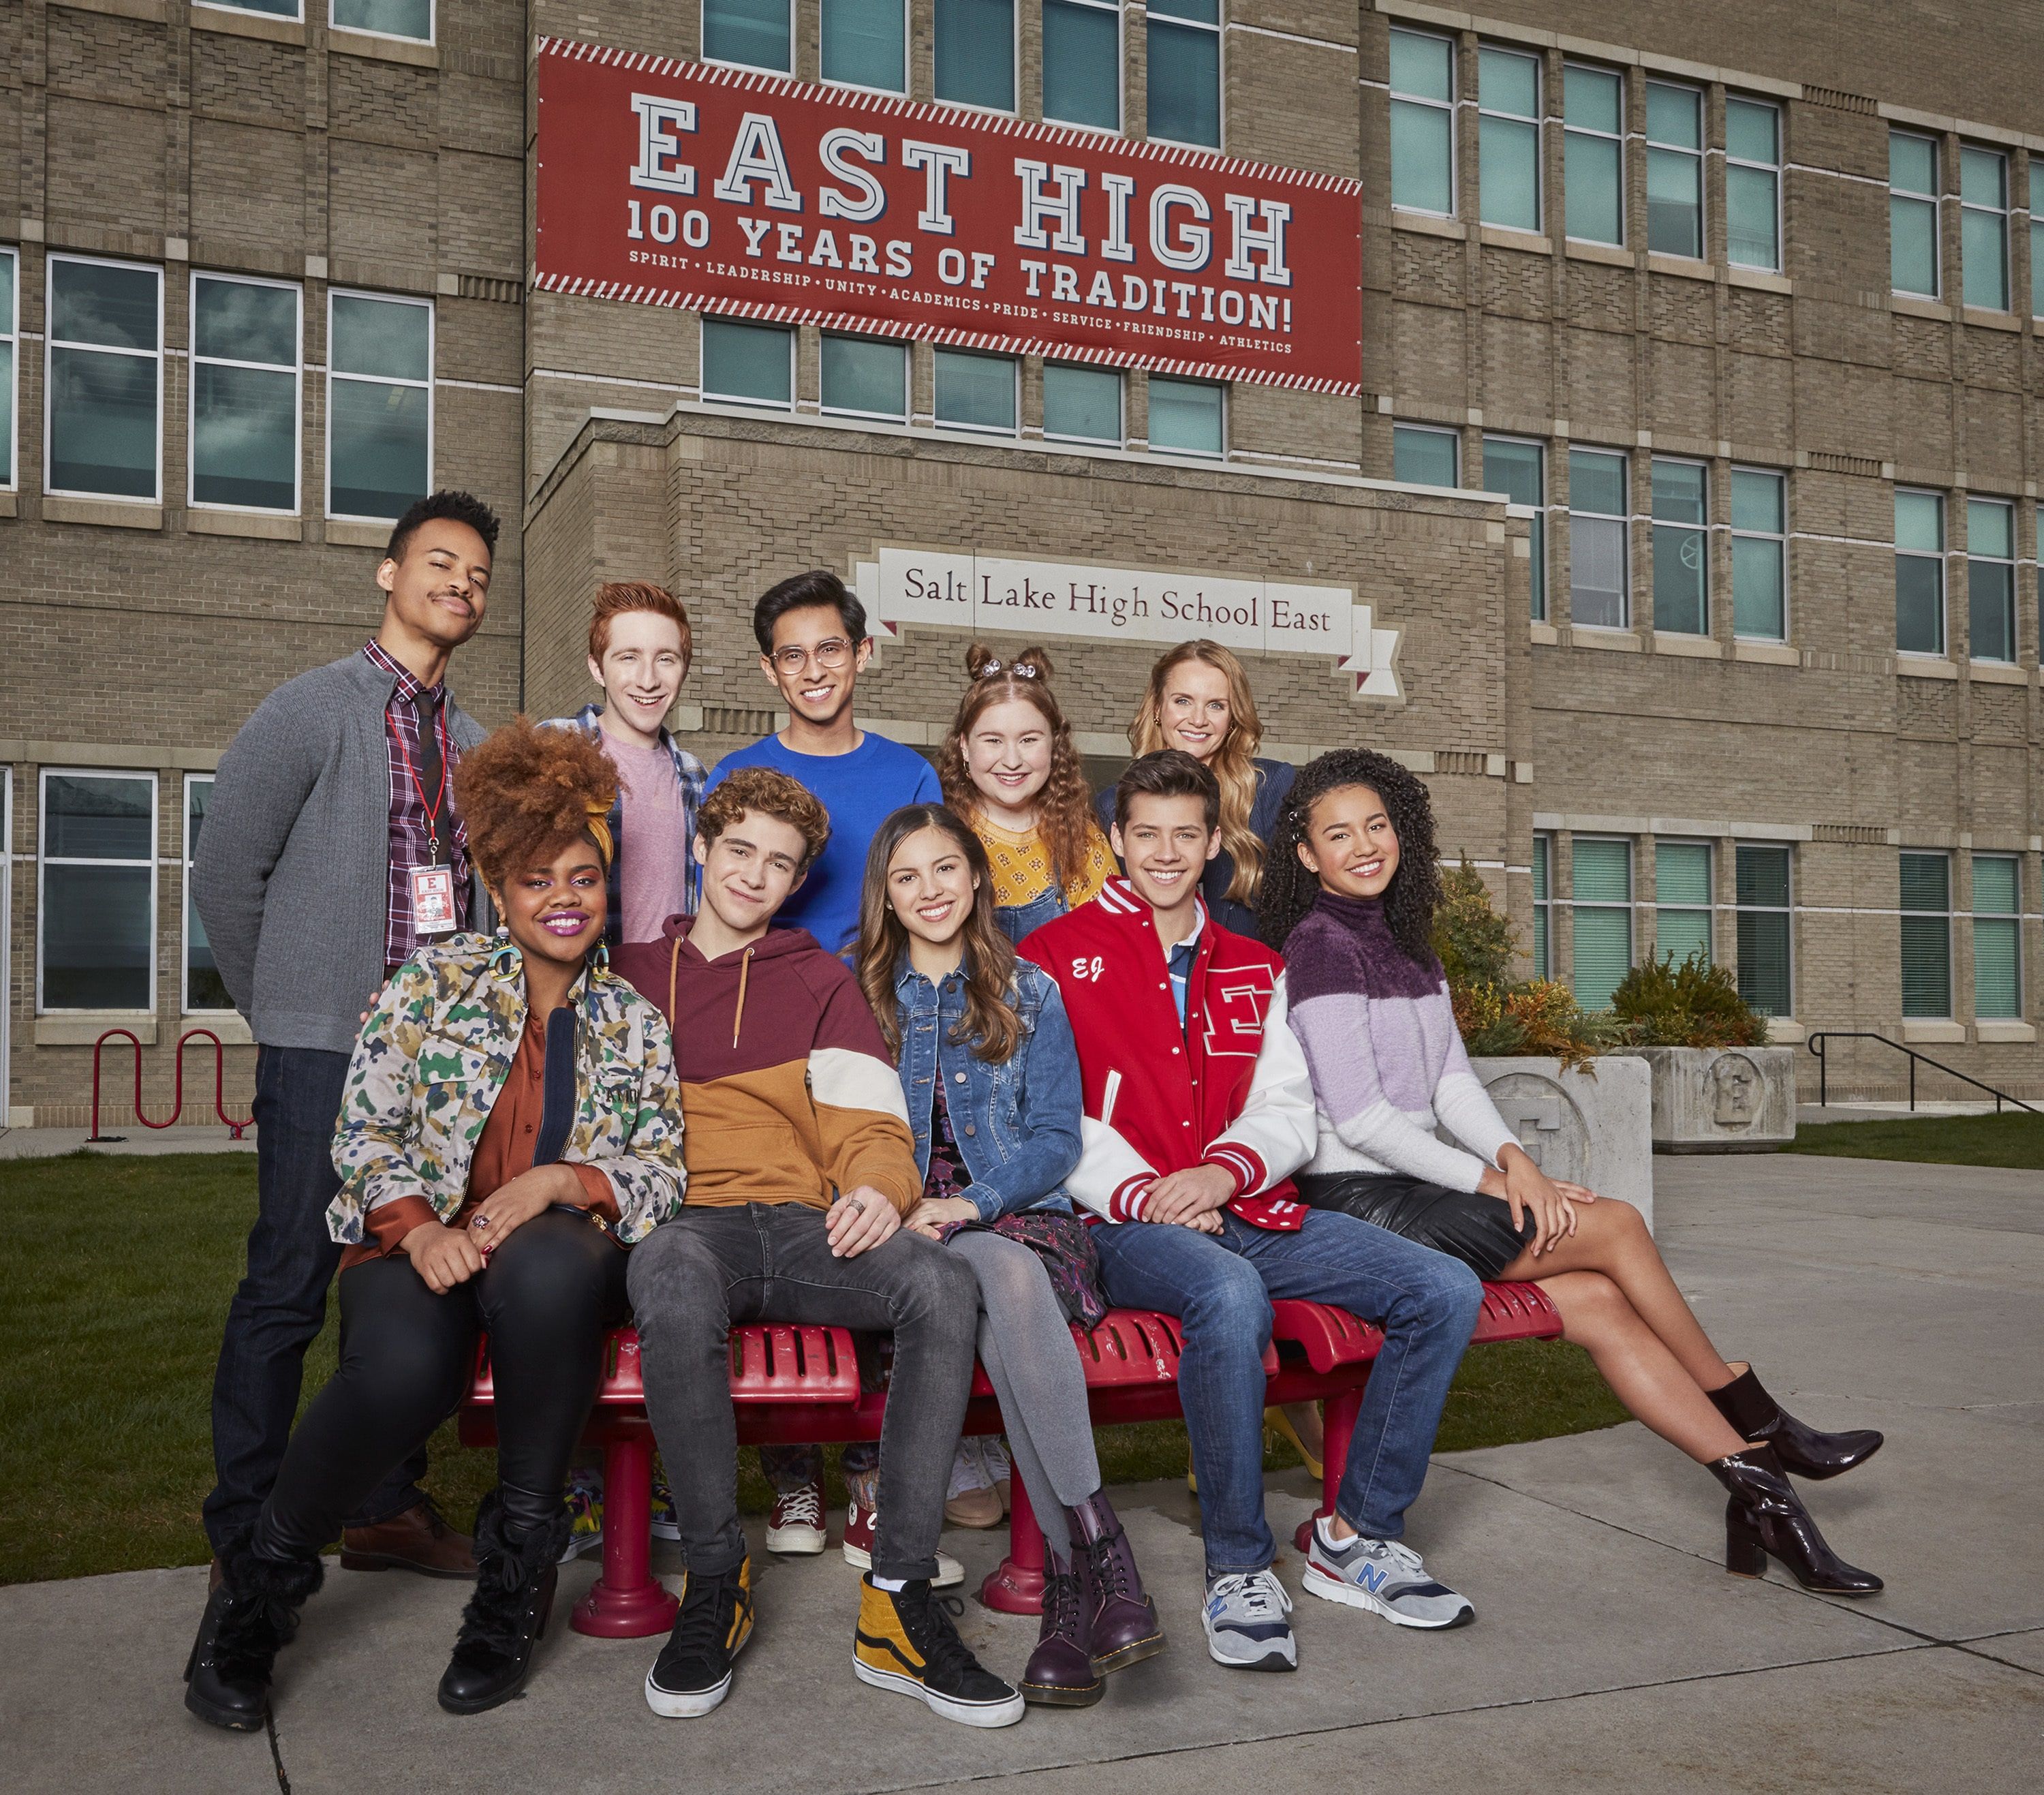 The series high school musical High School